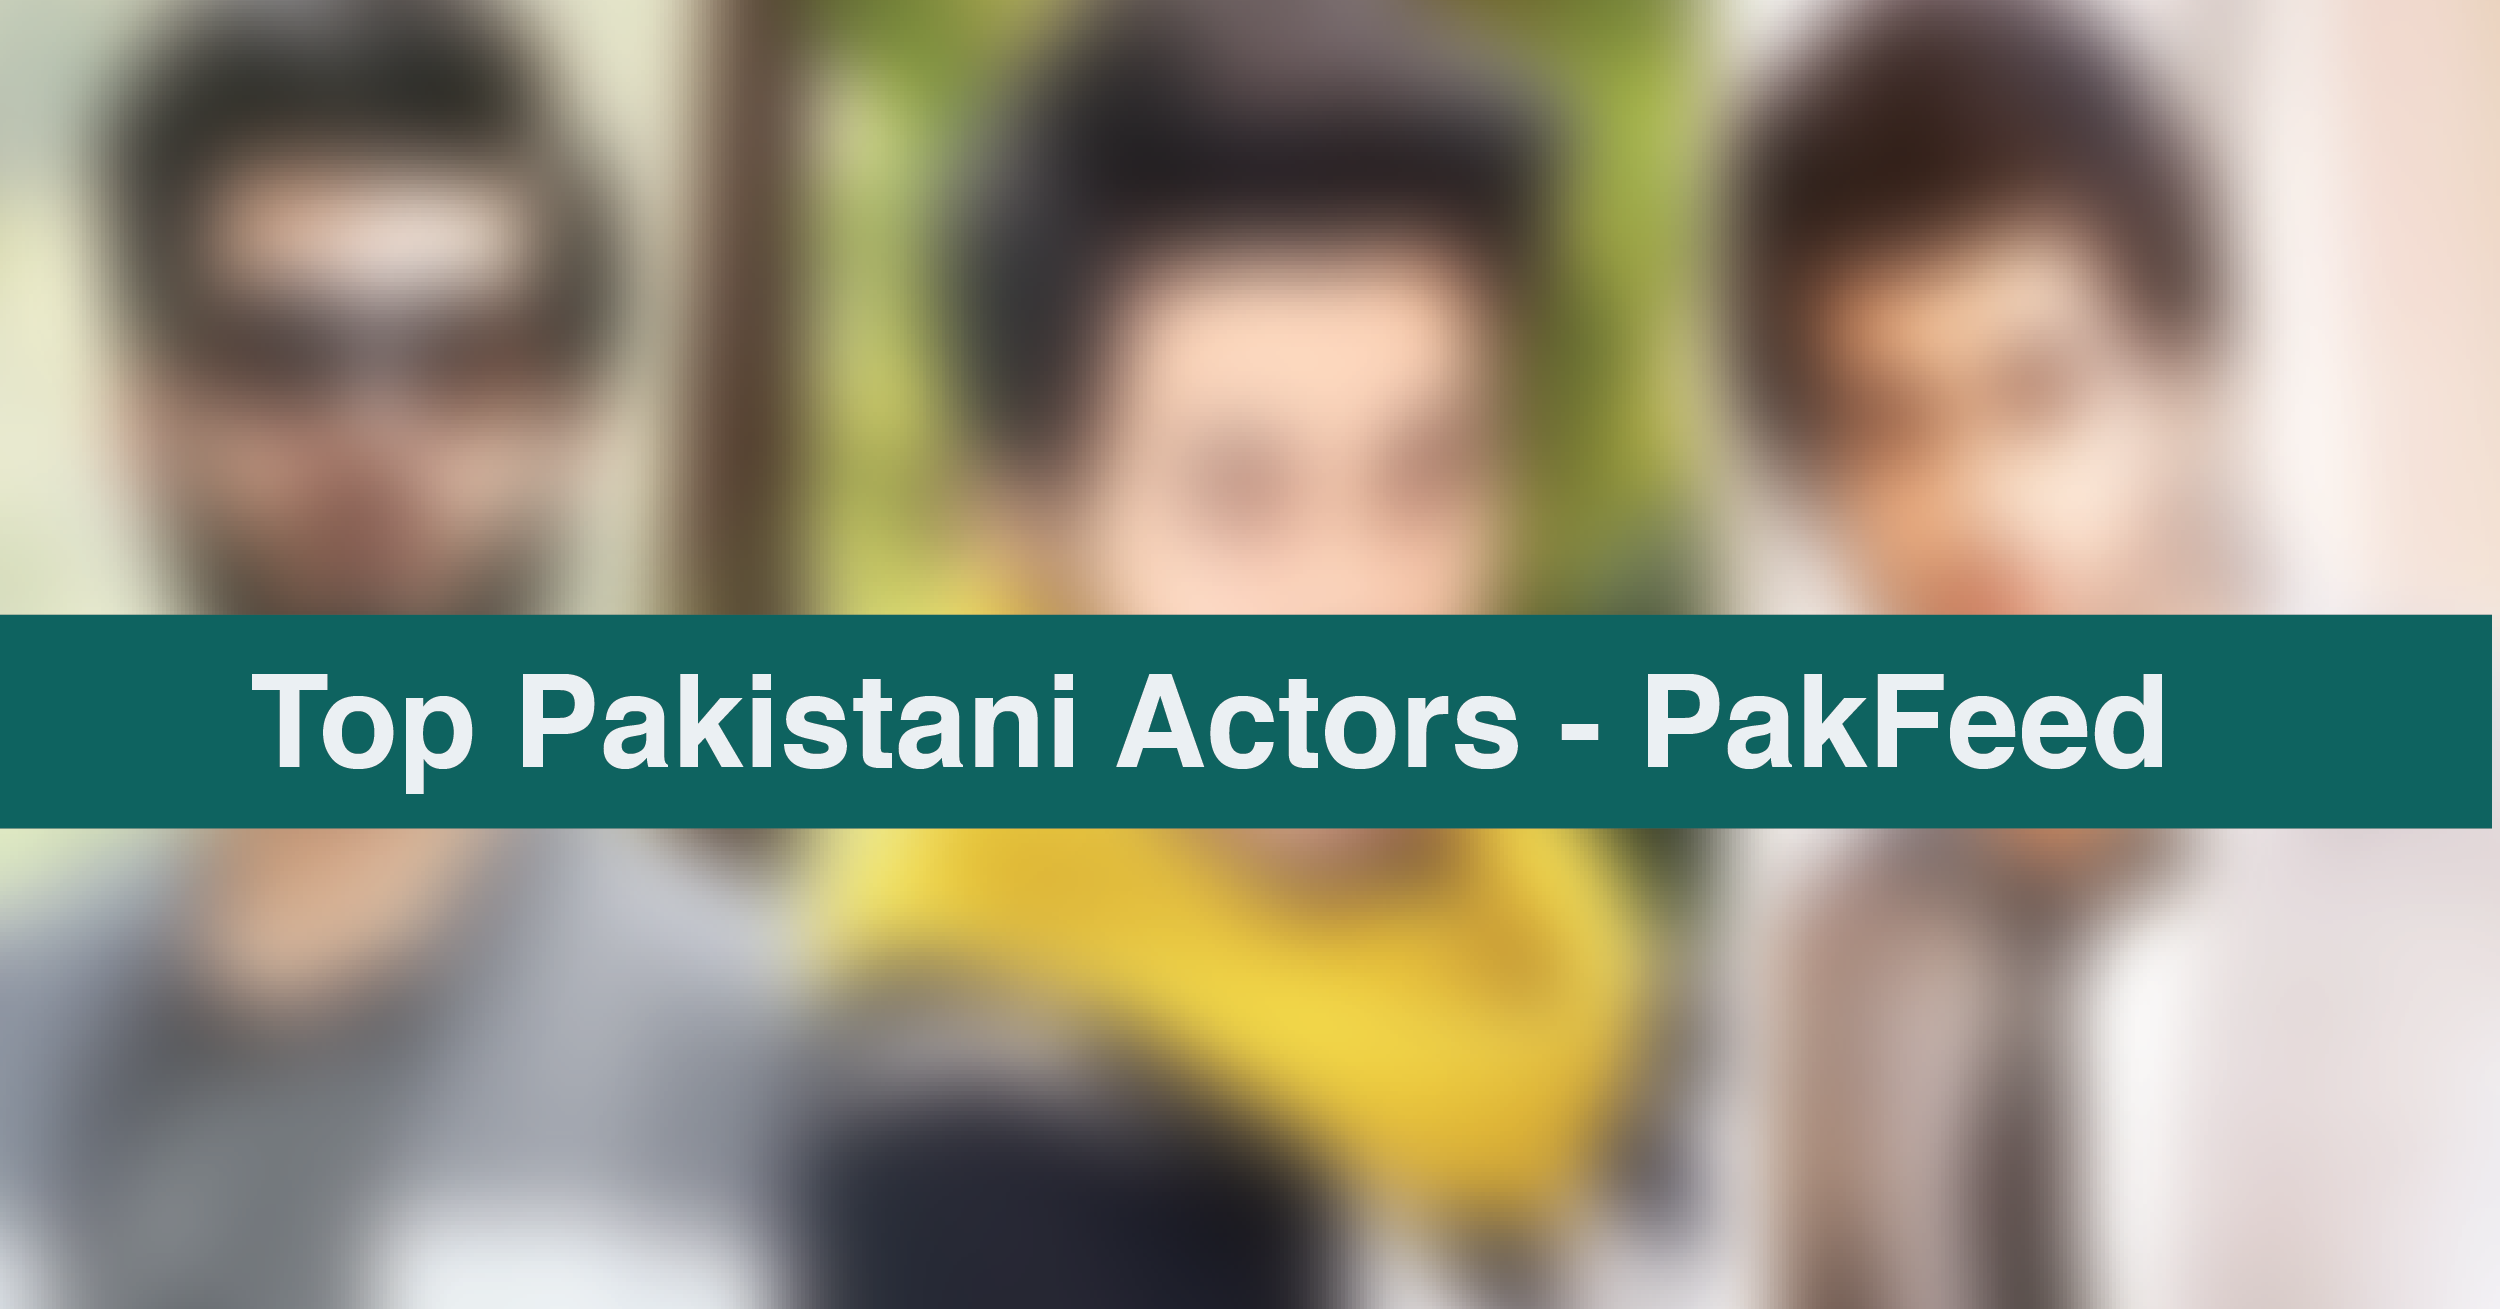 Top Pakistani Actors